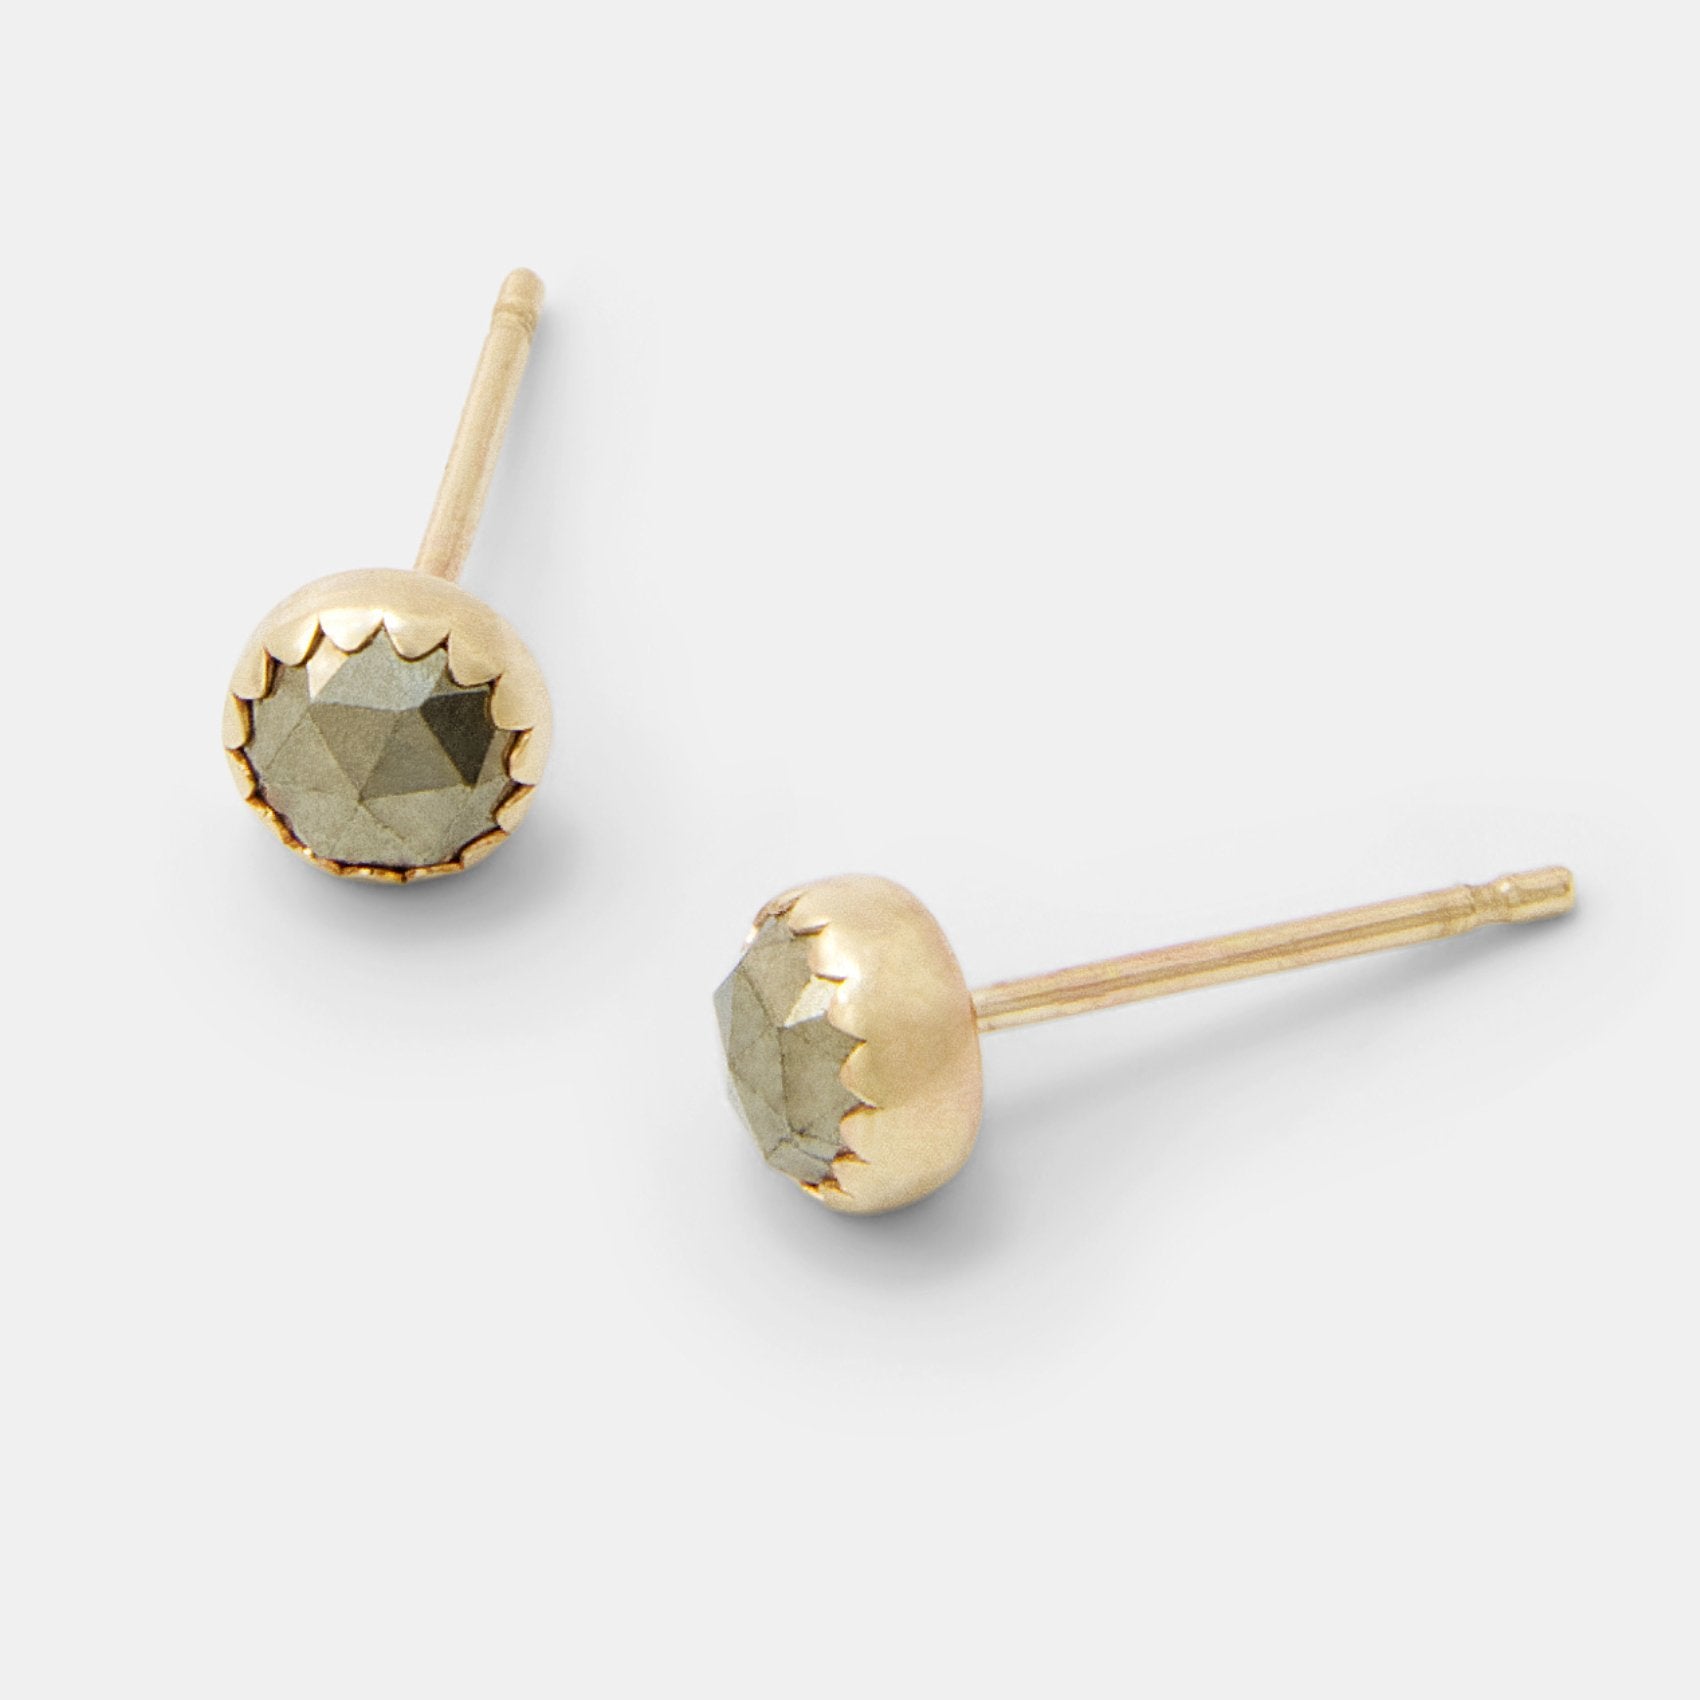 Pyrite & solid gold stud earrings - Simone Walsh Jewellery Australia